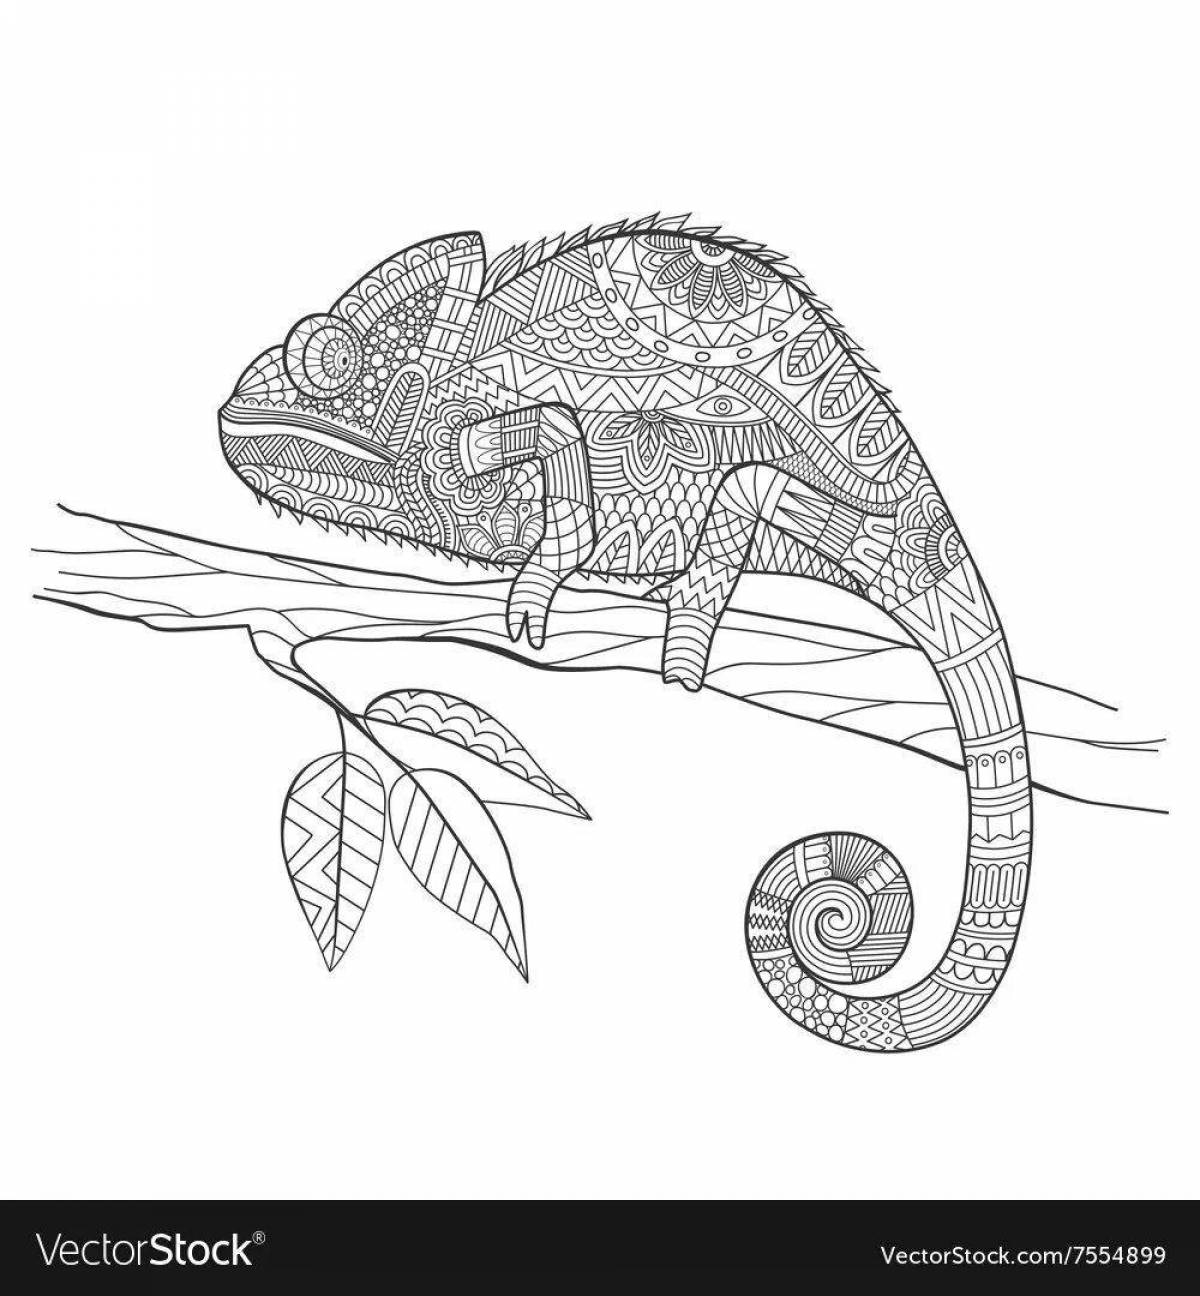 Calming coloring book antistress chameleon